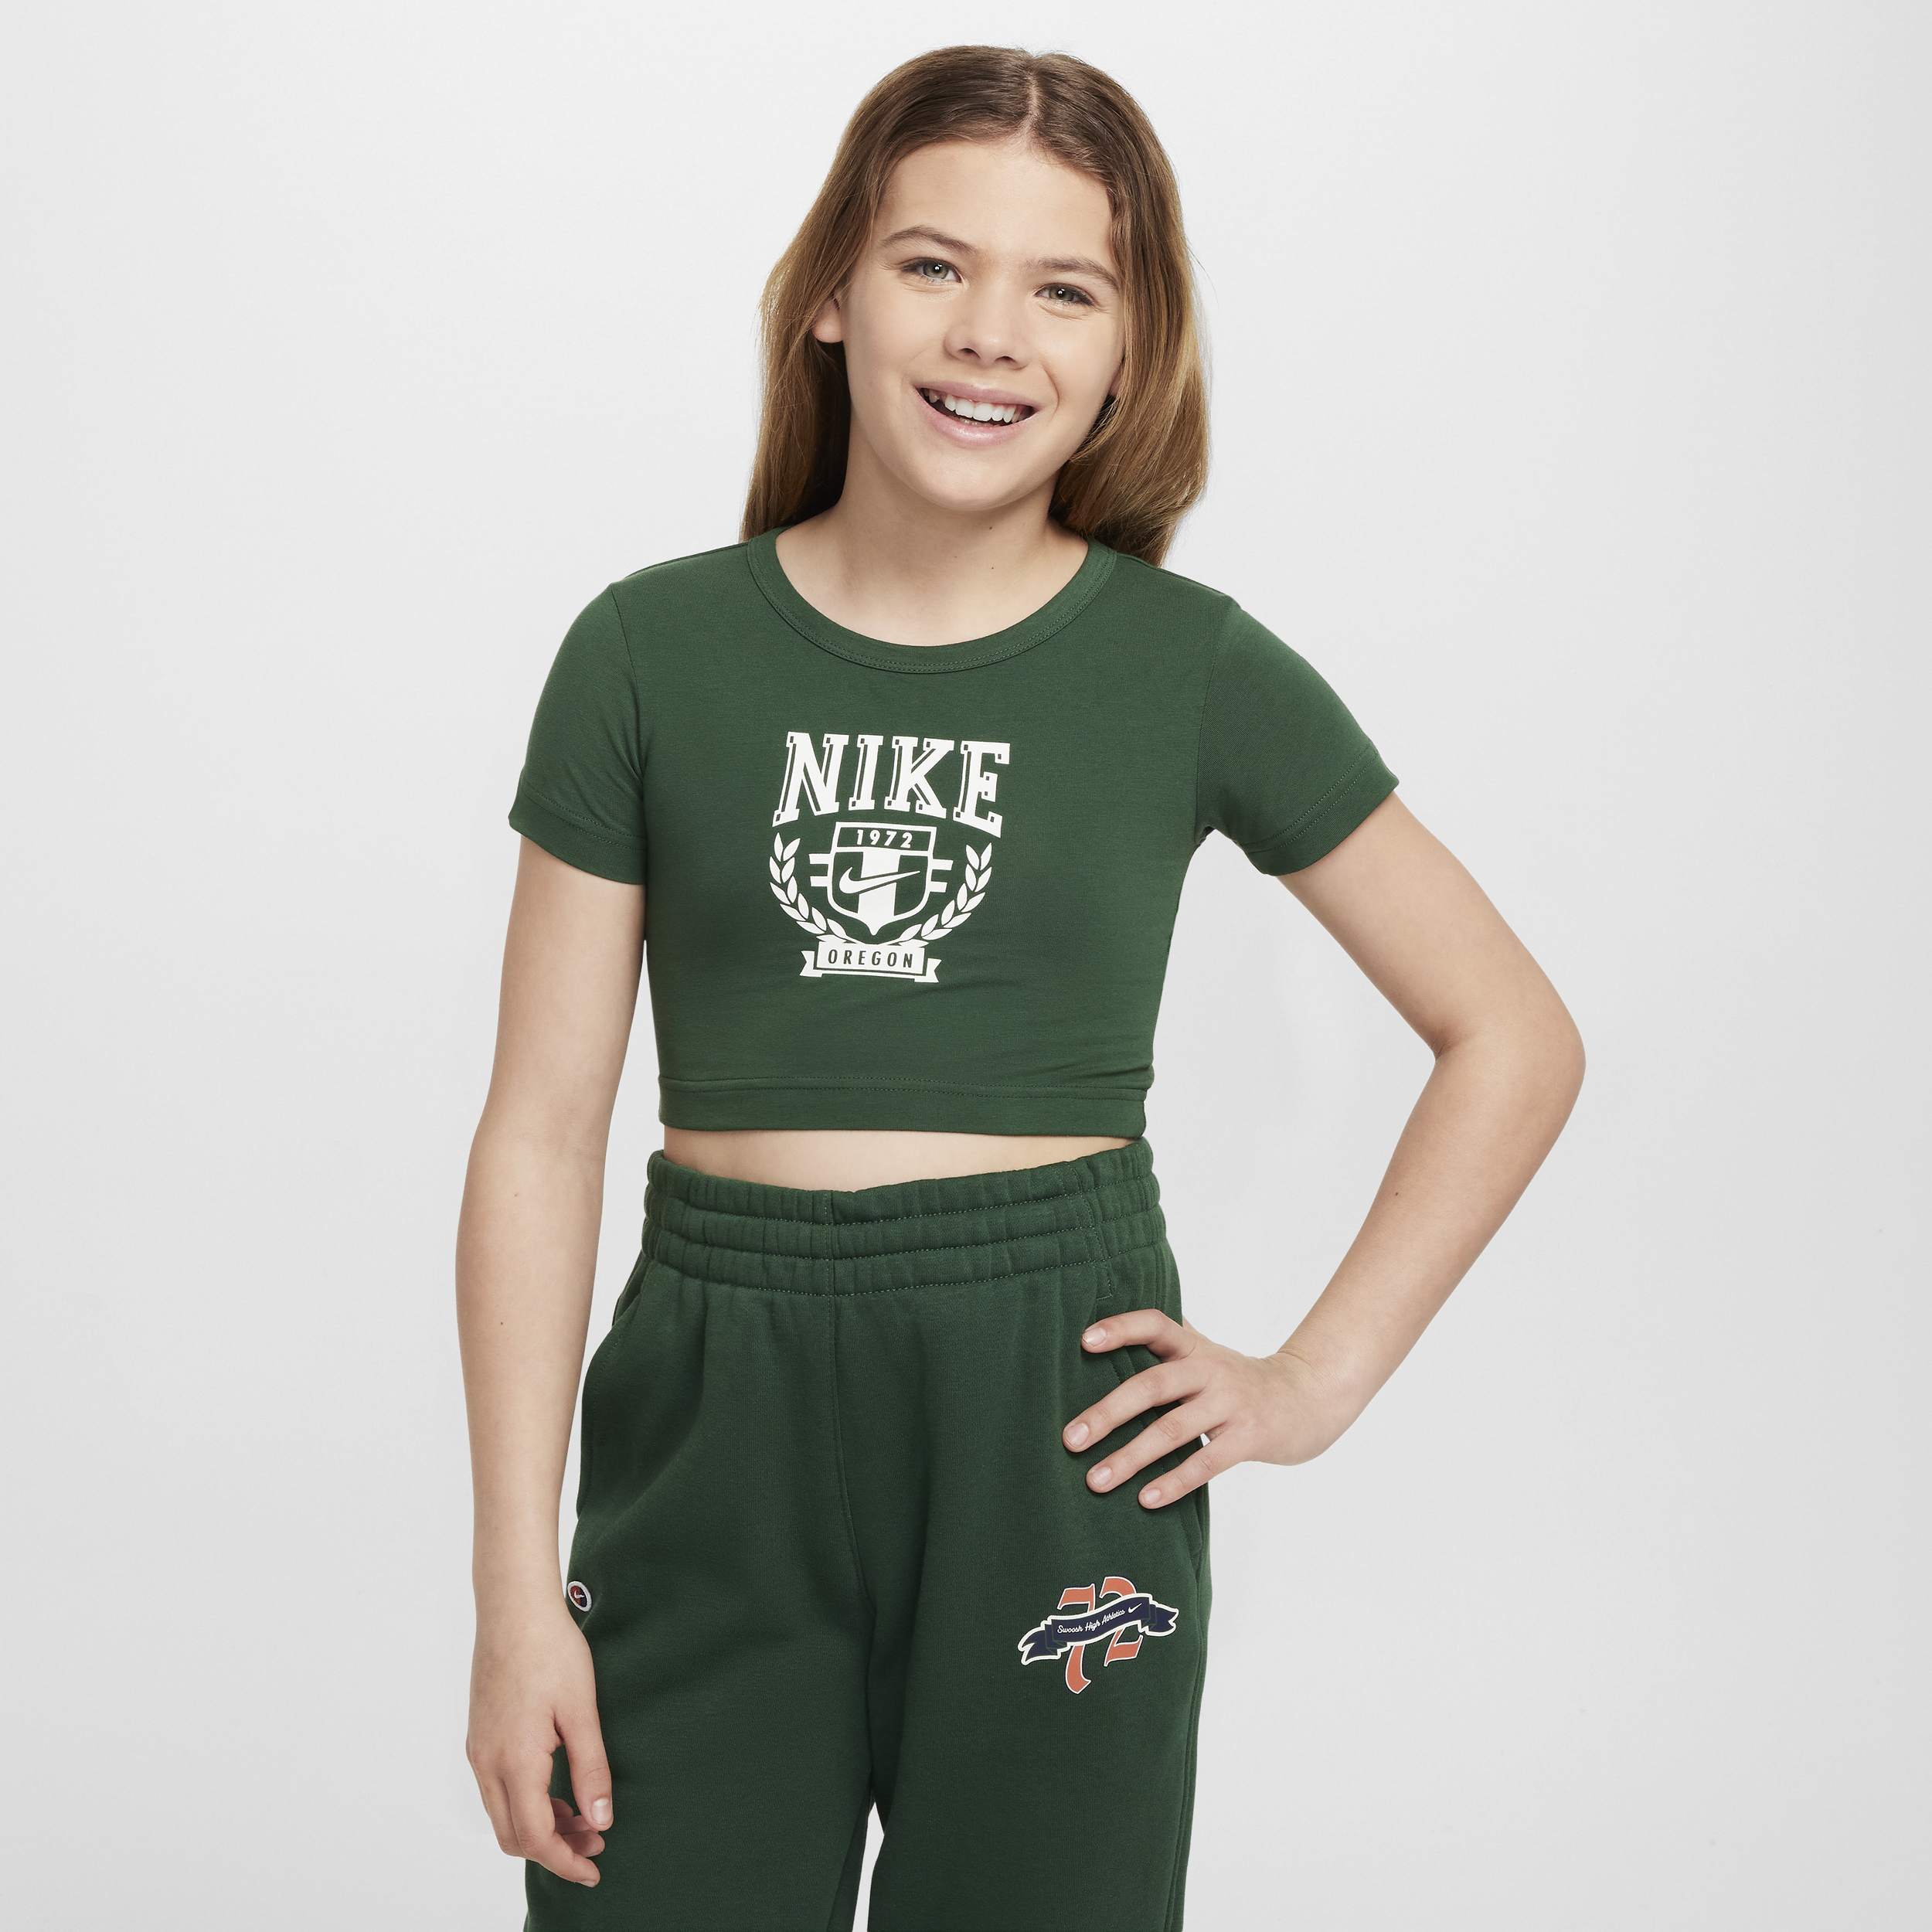 Nike Sportswear T-shirt met graphic voor meisjes - Groen